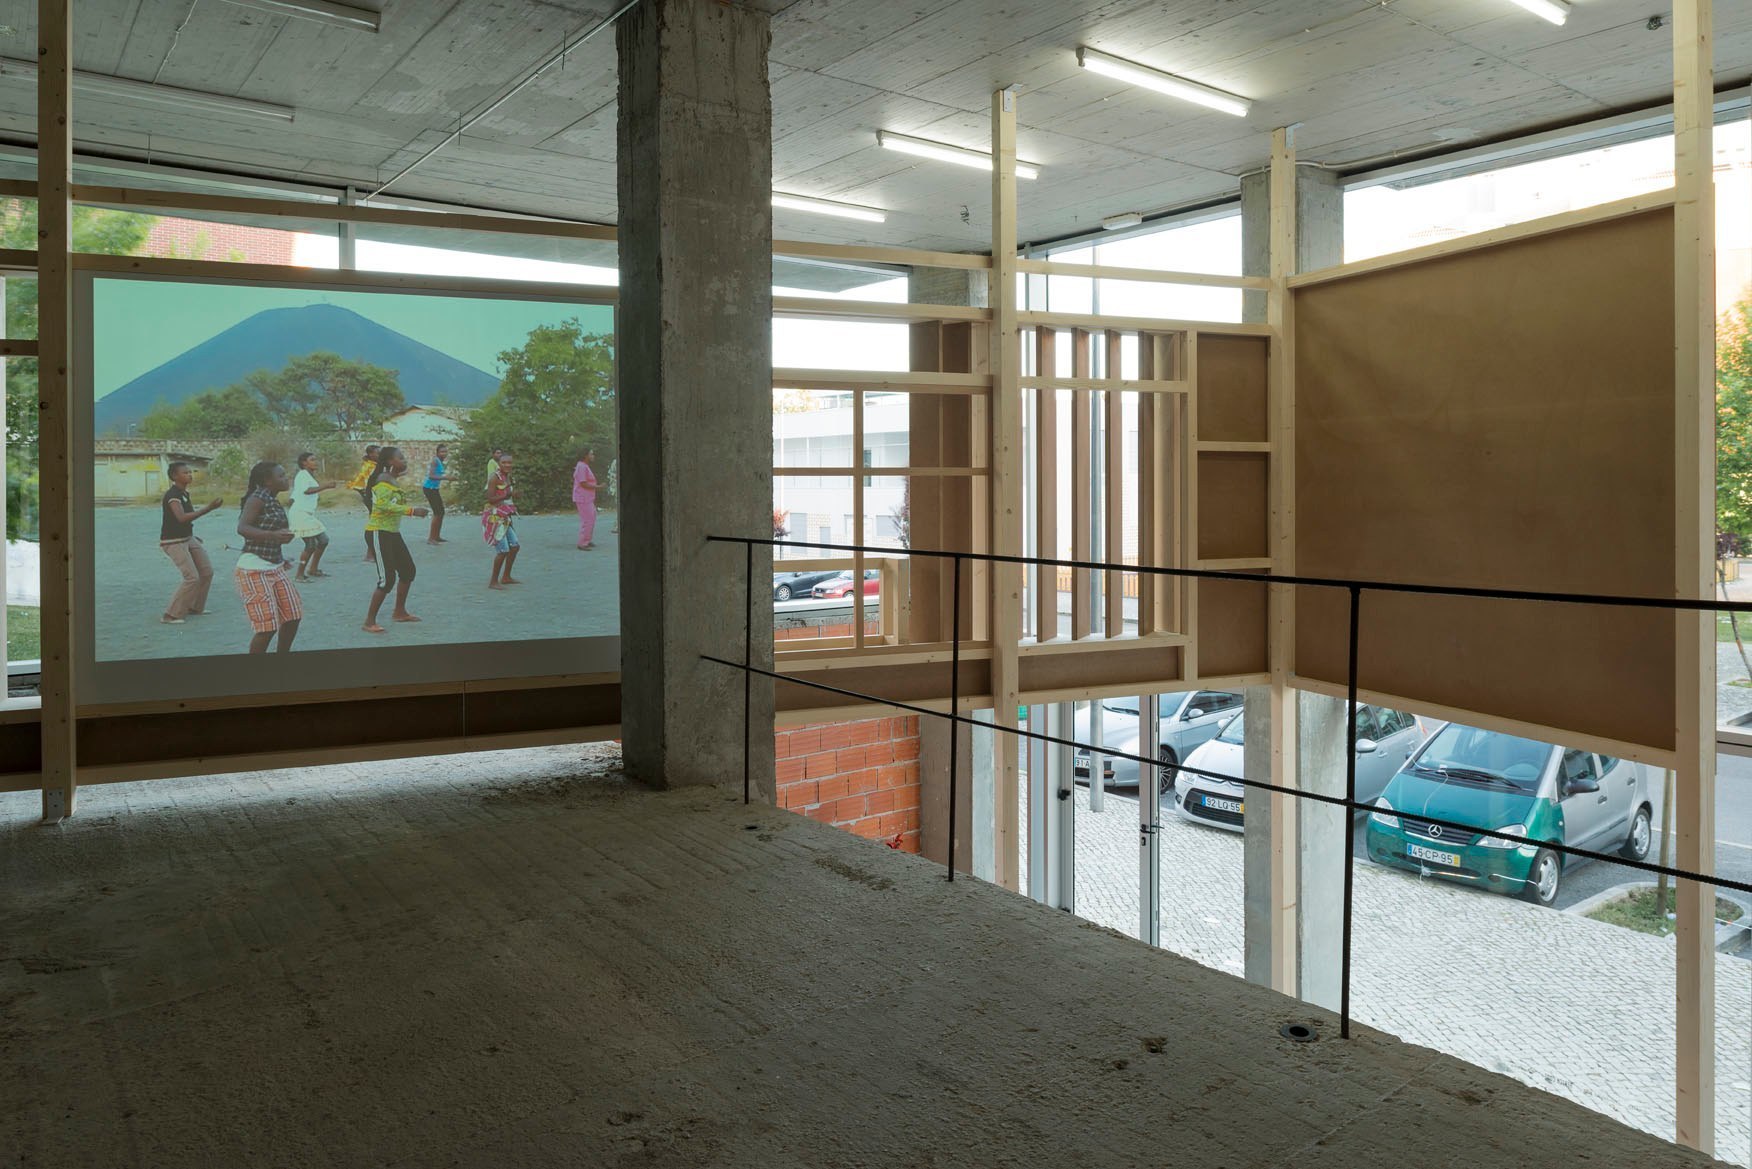 Ângela Ferreira, ‘Indépendance Cha Cha’, installation view, Lumiar Cité, 2014